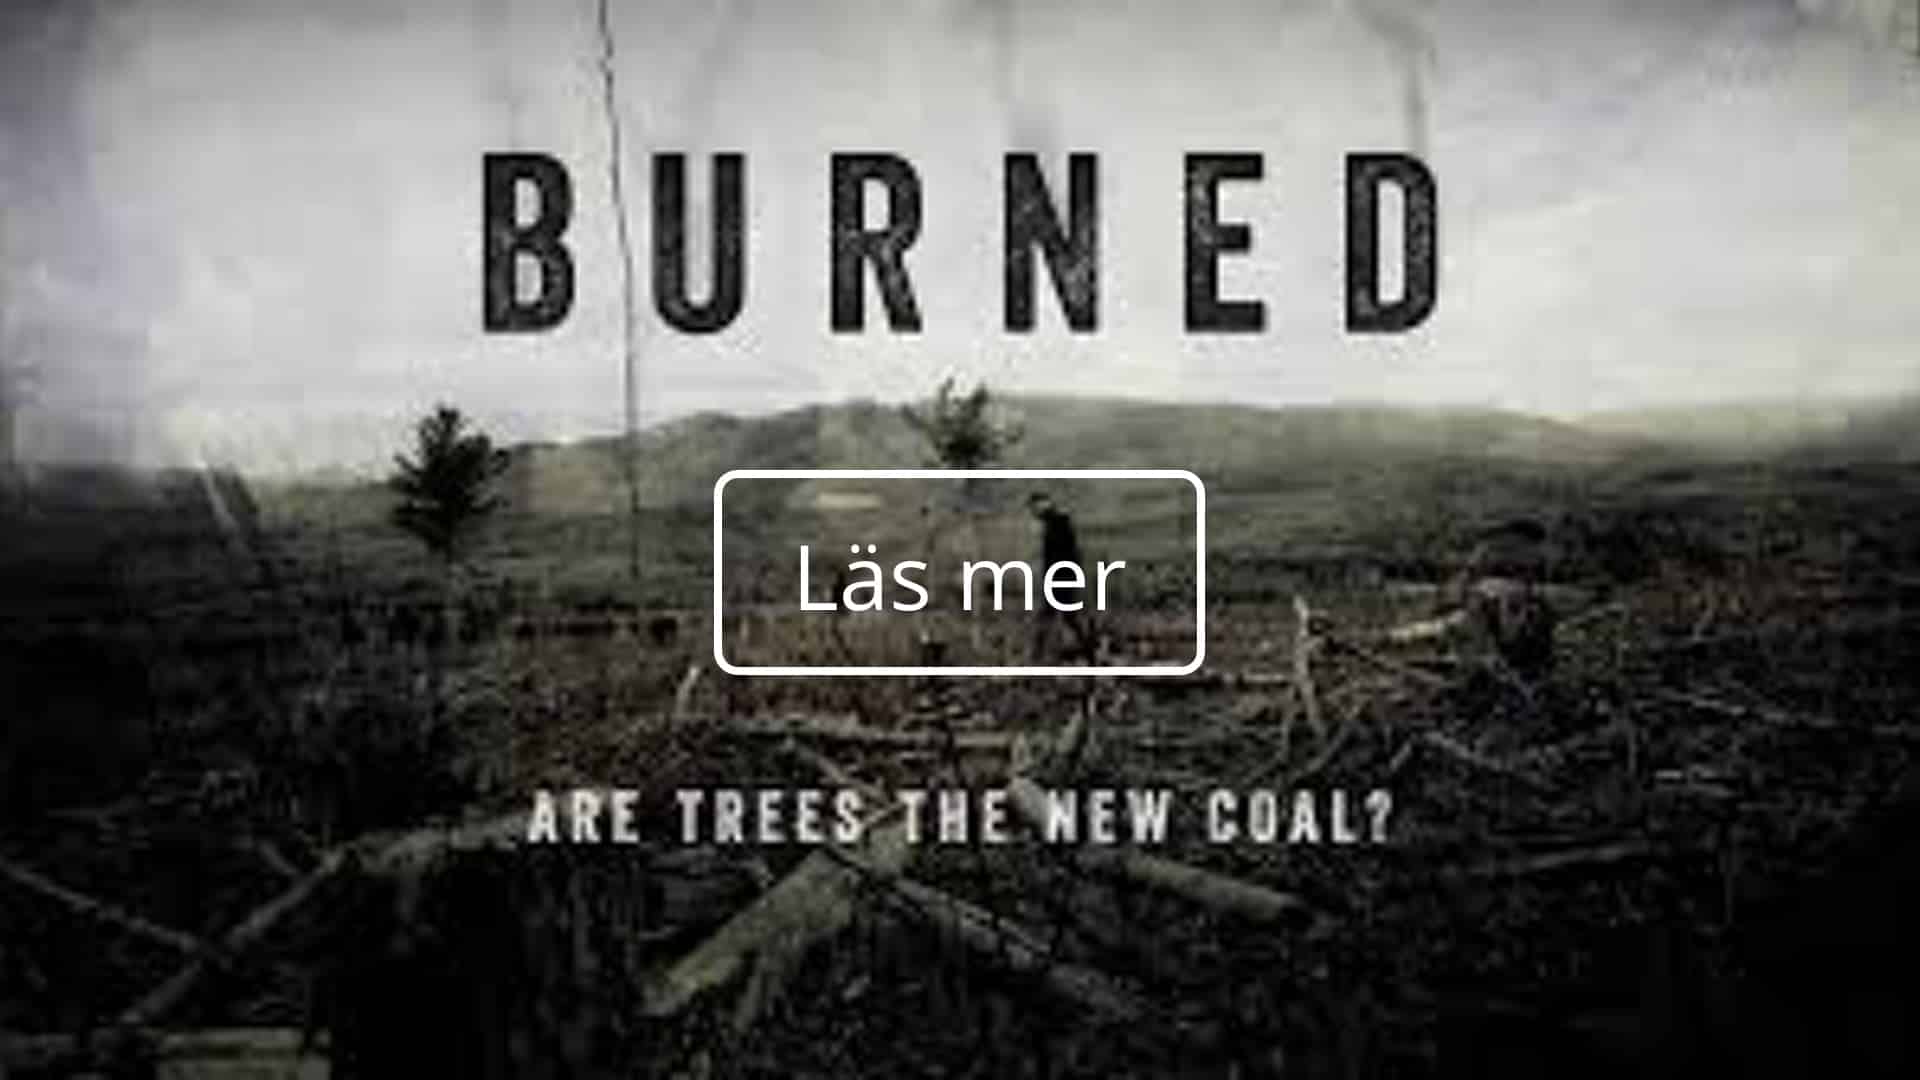 thefuture, resurs, Burned, Are Trees the new coal